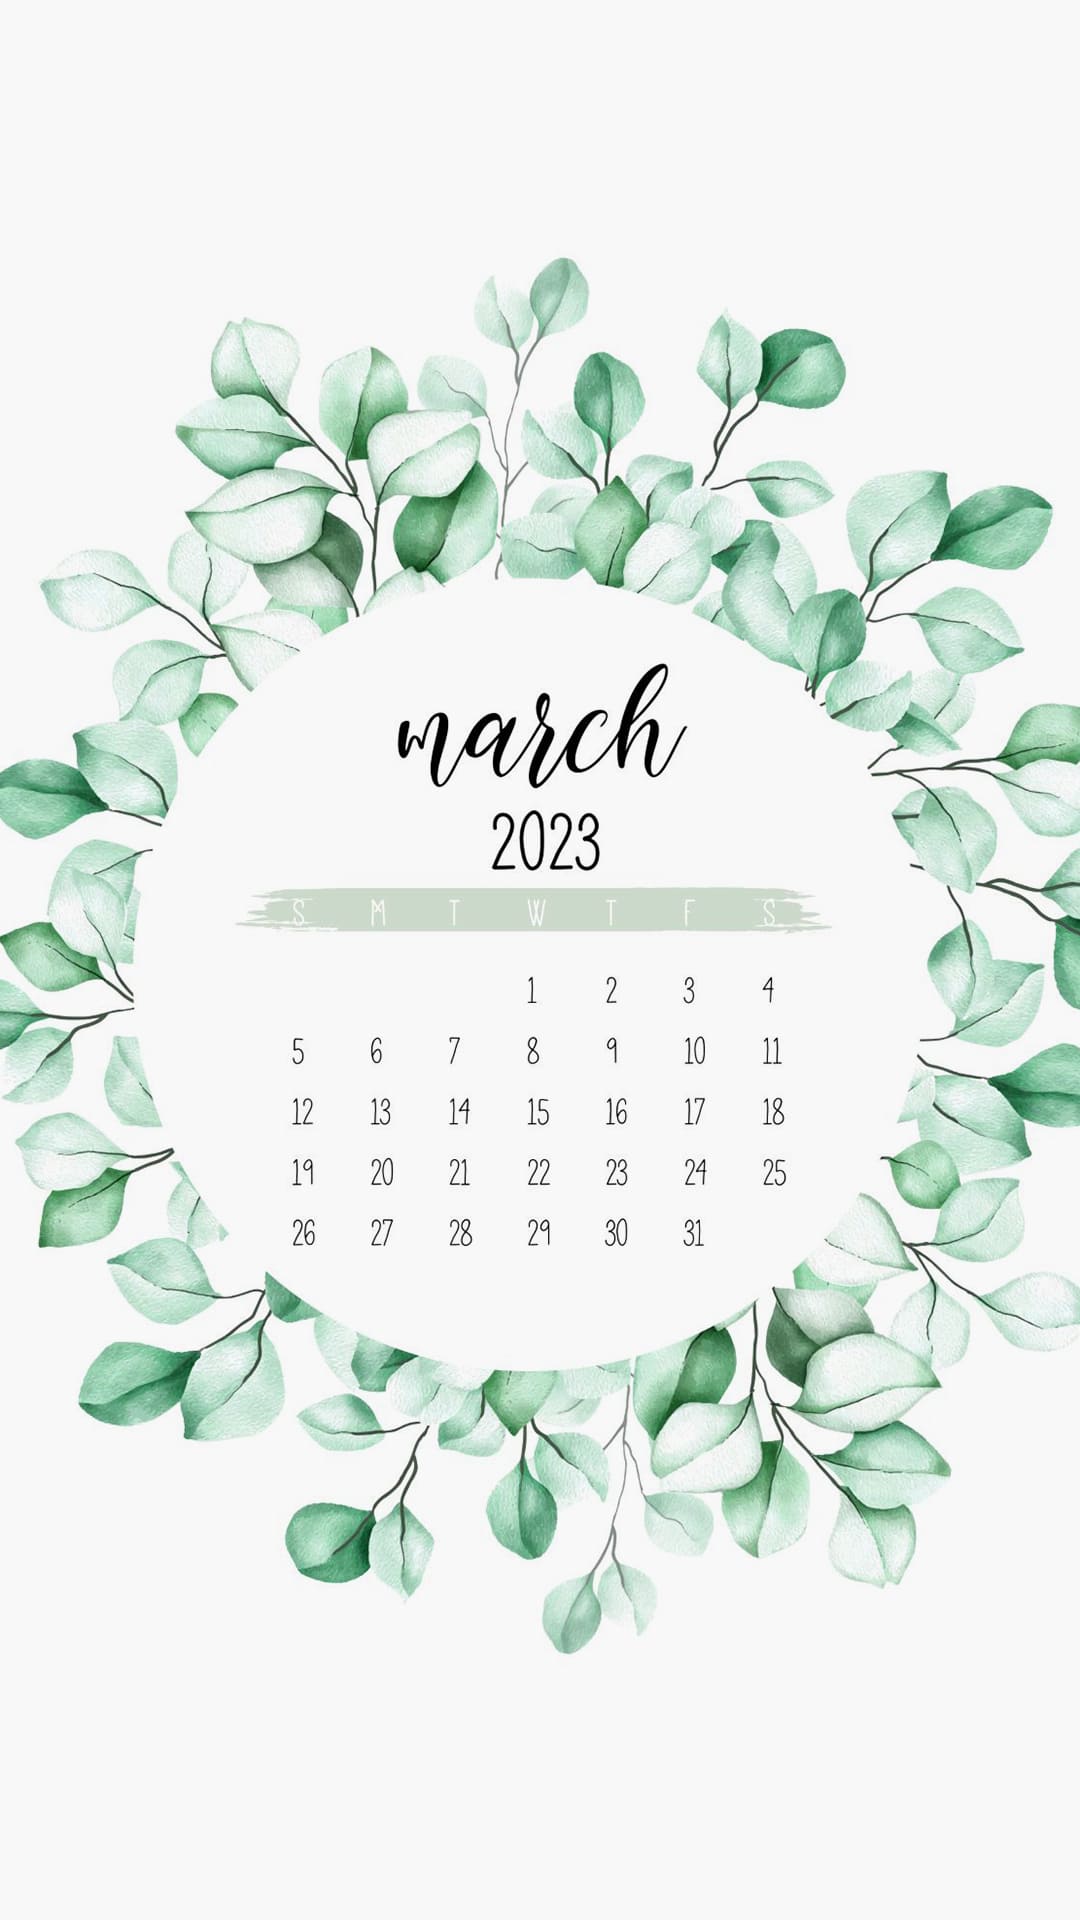 March 2023 Calendar Wallpapers HD Free Download  PixelsTalkNet